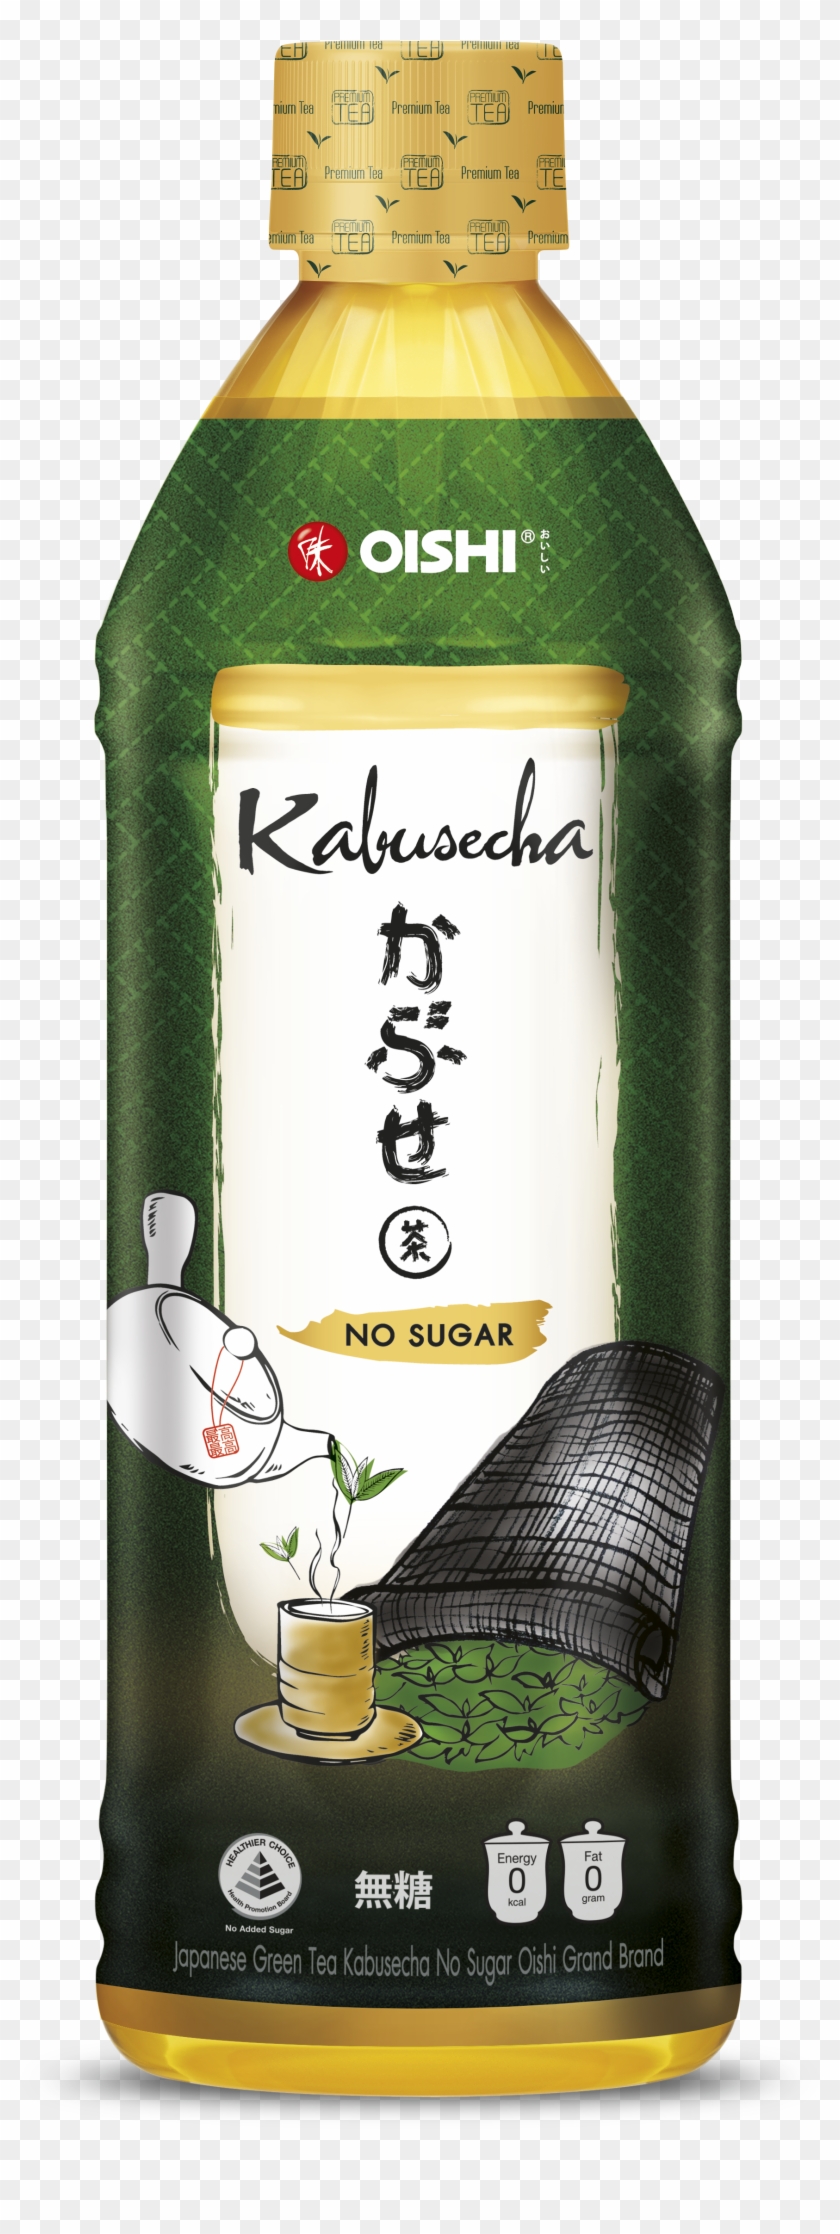 Kabusecha Japanese Green Tea No Sugar500ml - Oishi Kabusecha Clipart #2706701